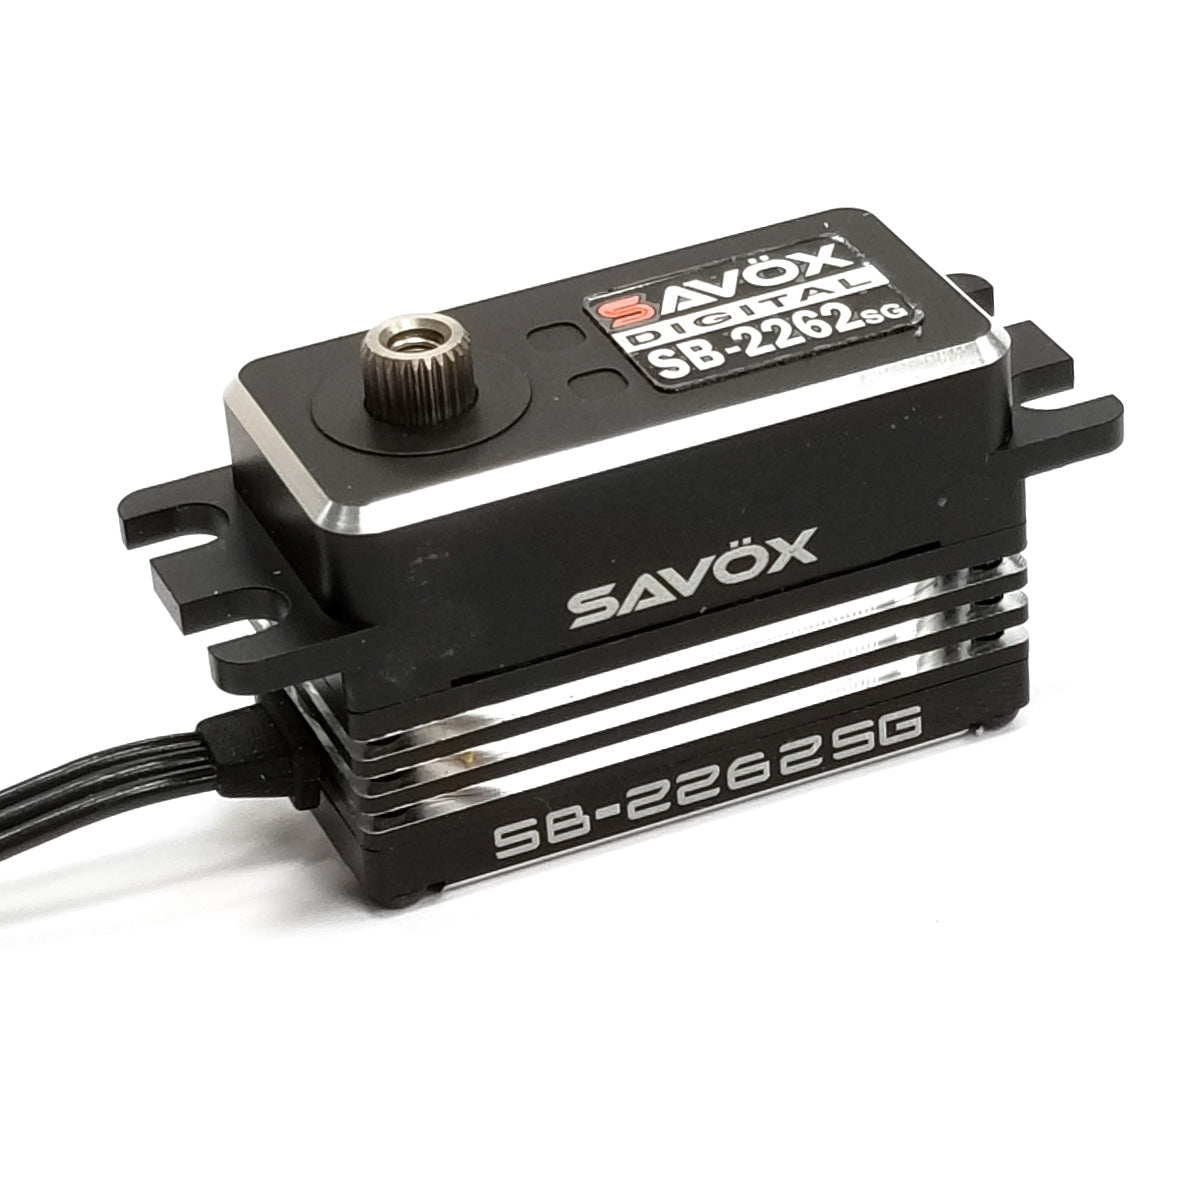 Savox SB-2262SG "High Torque" Low Profile Brushless Steel Gear Digital Servo (High Voltage)